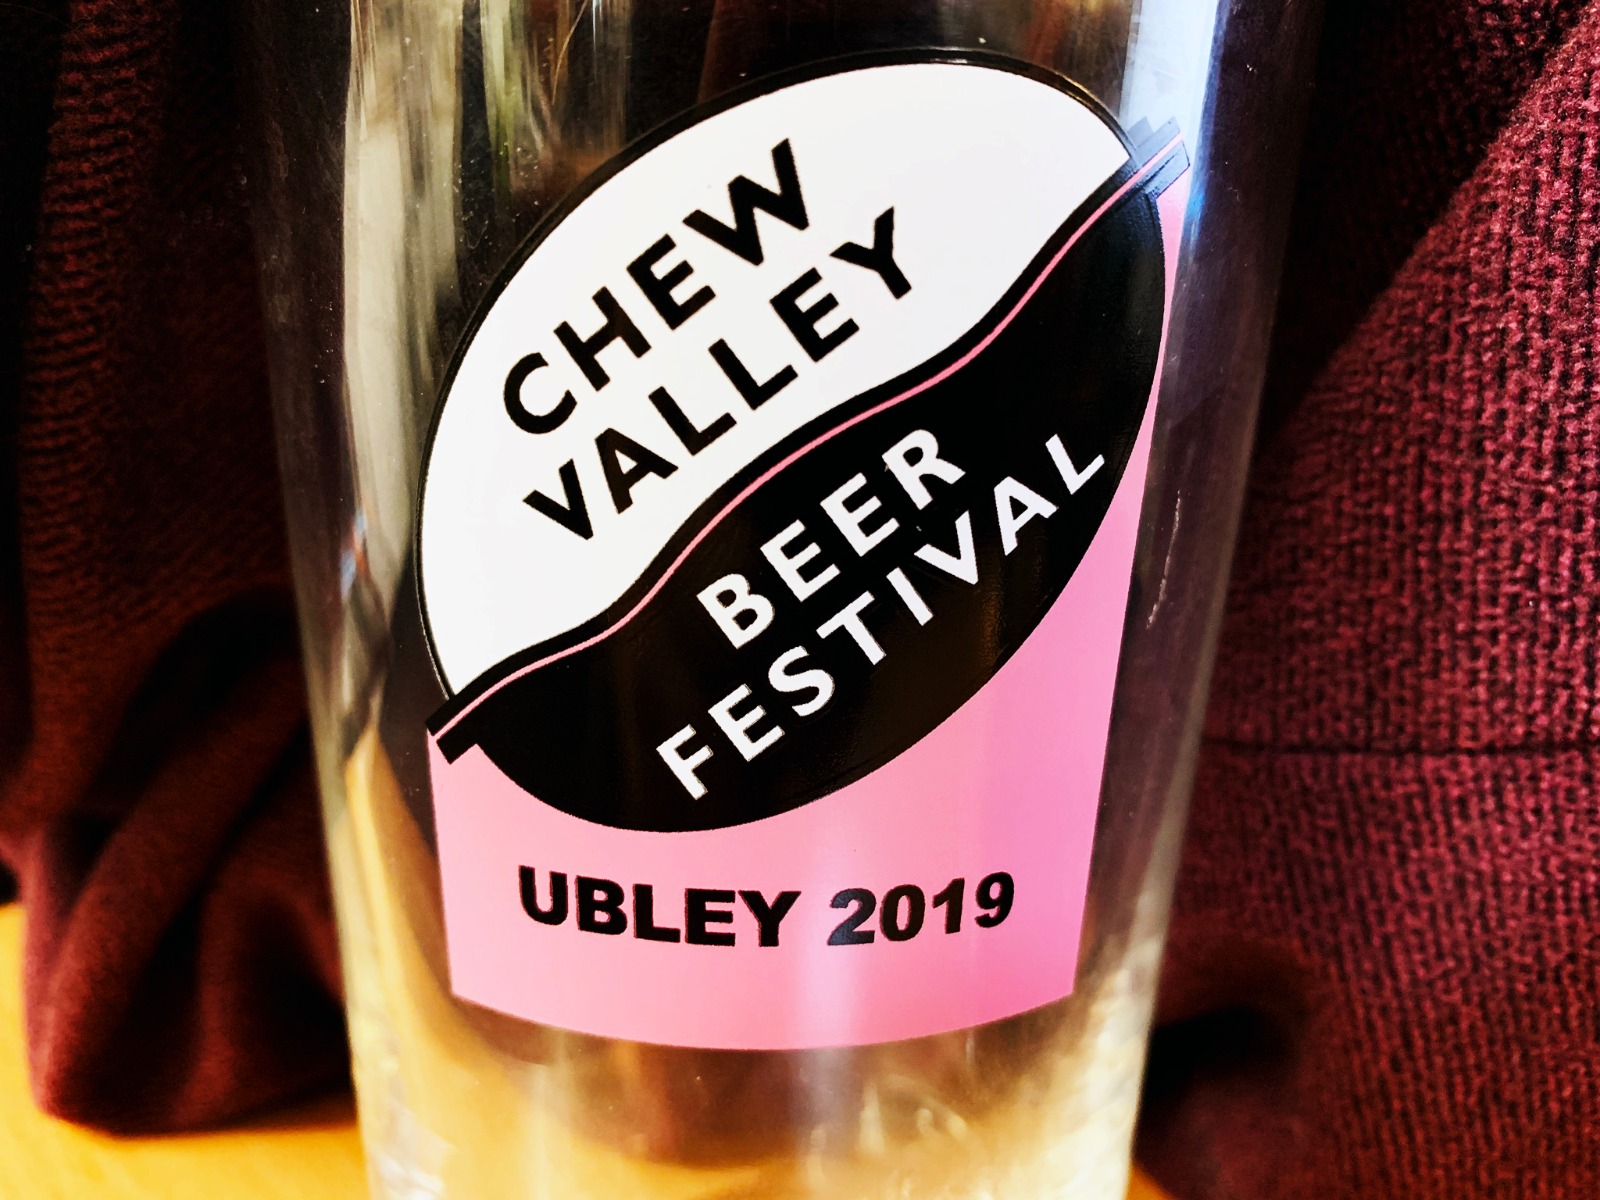 Chew valley - Festival Glass